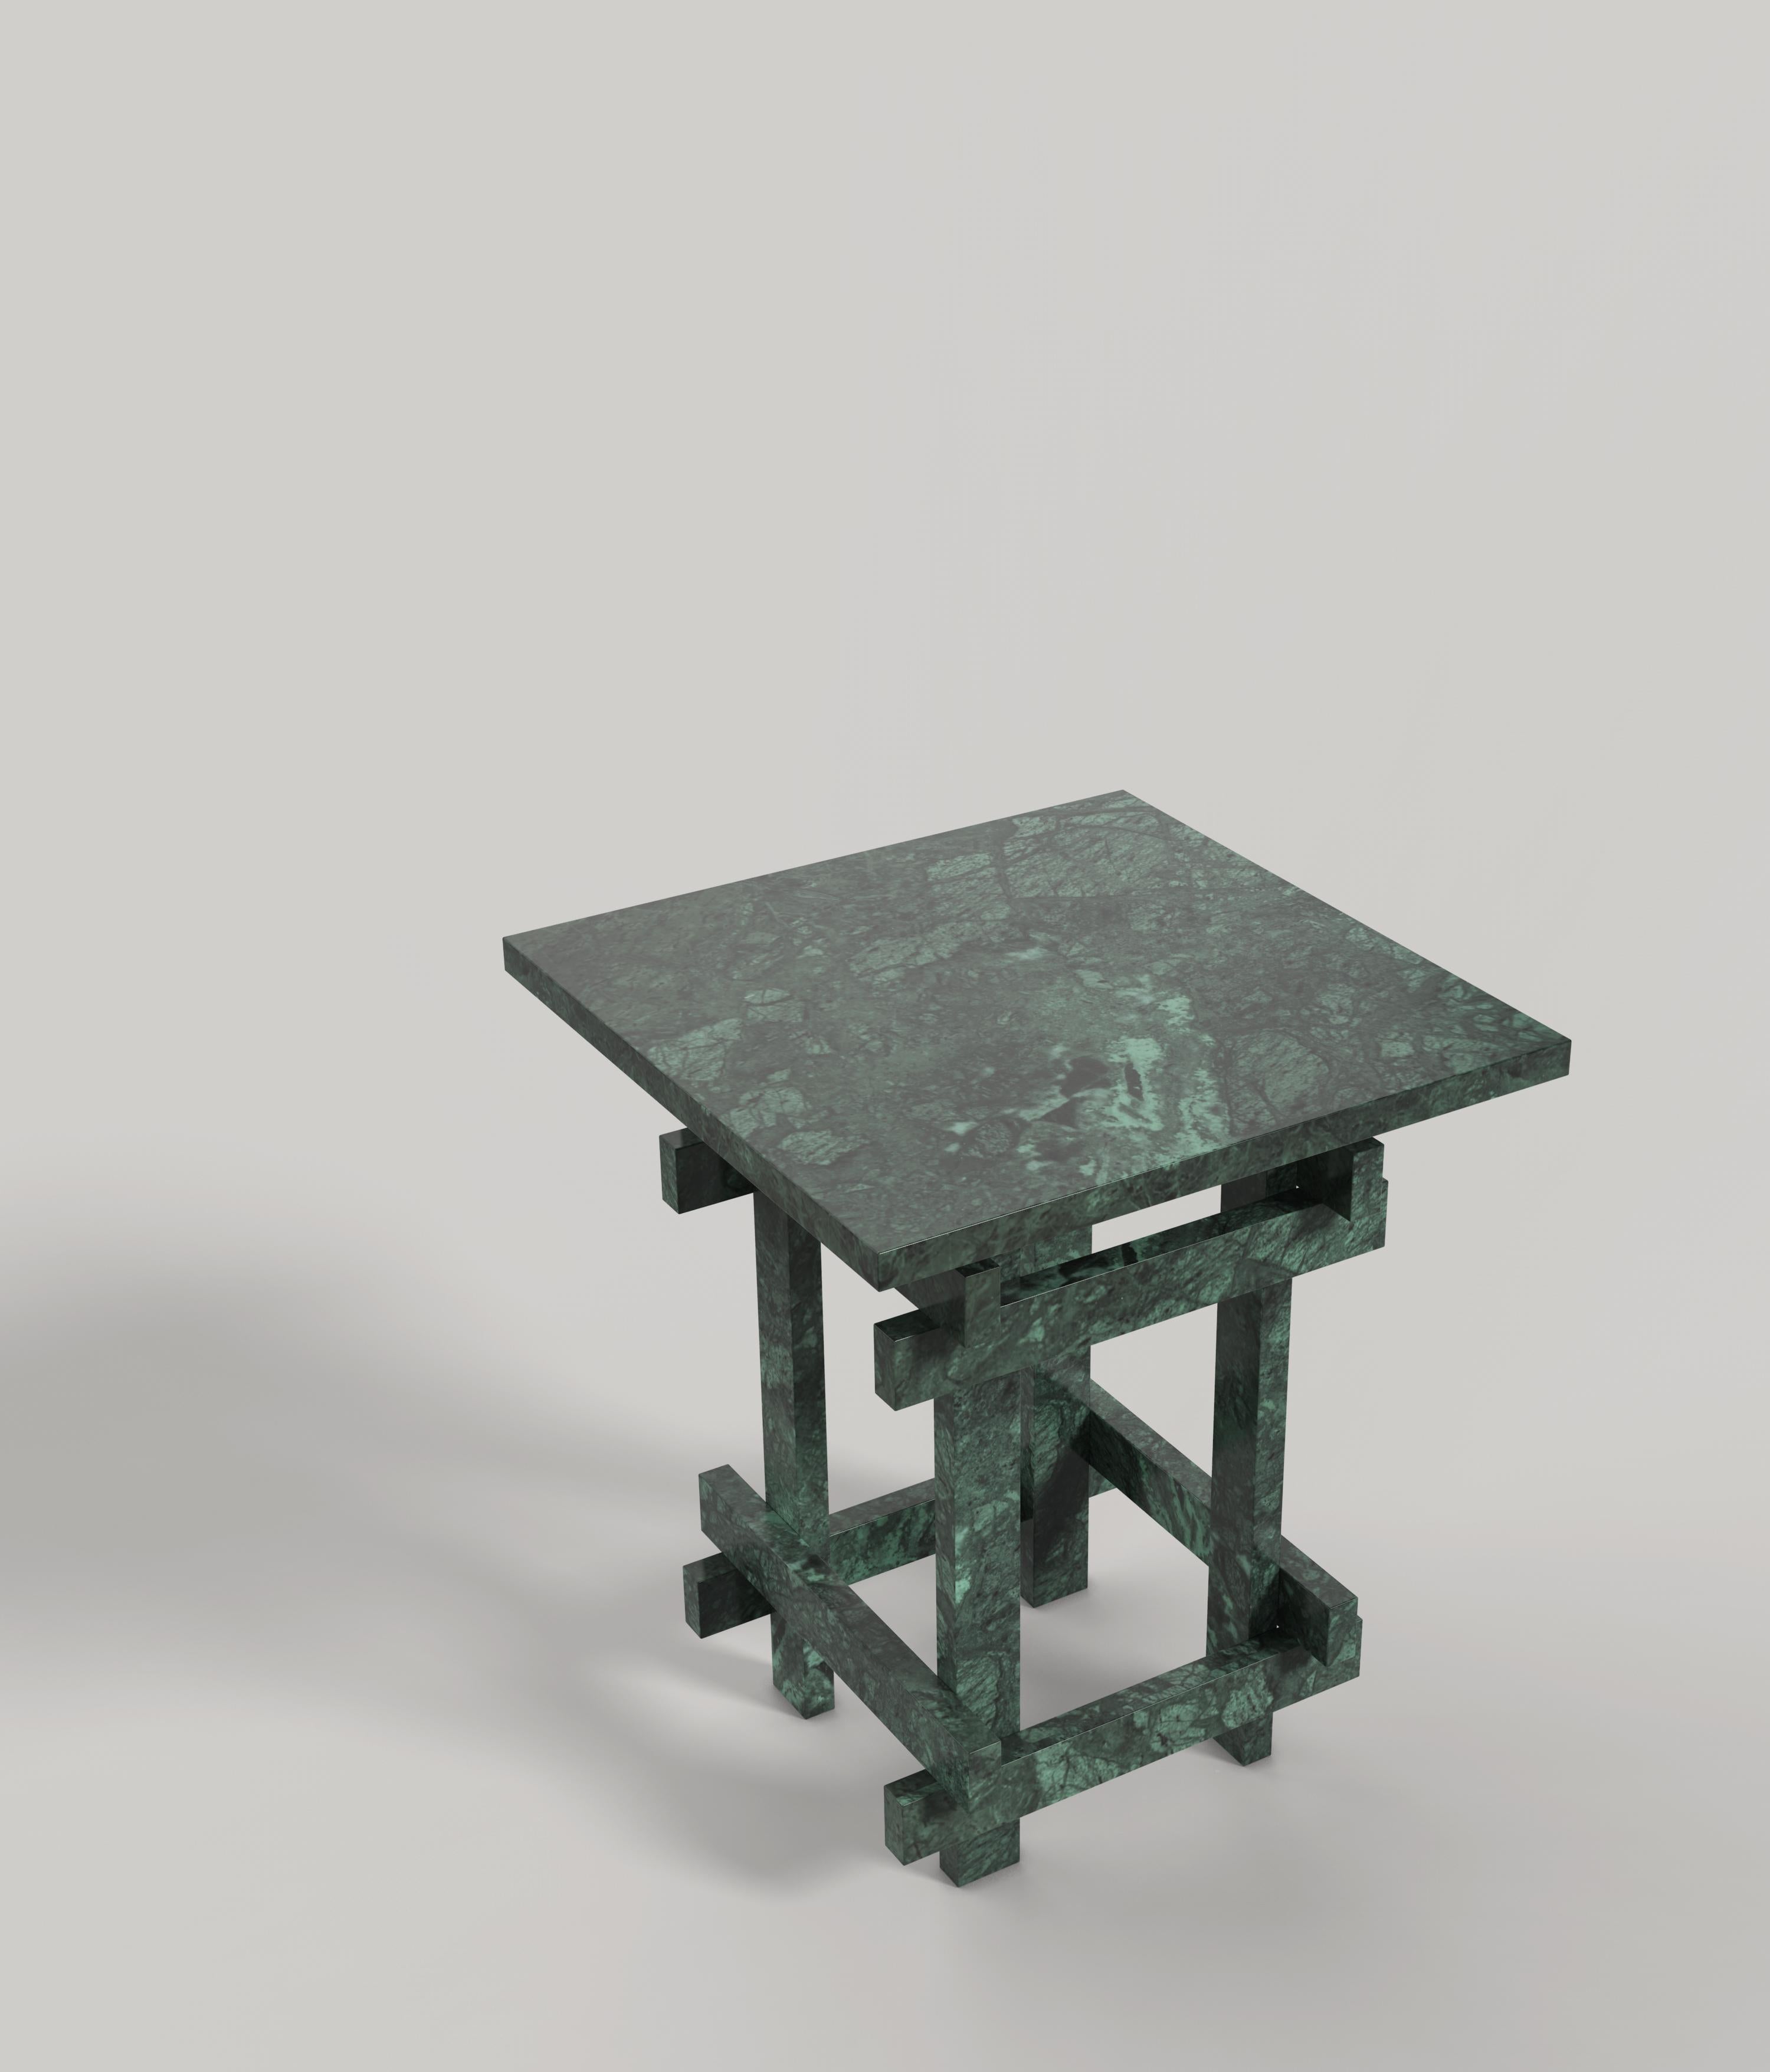 Italian Contemporary LimitedEdition Green Marble Table, Paranoid V1 by Edizione Limitata For Sale